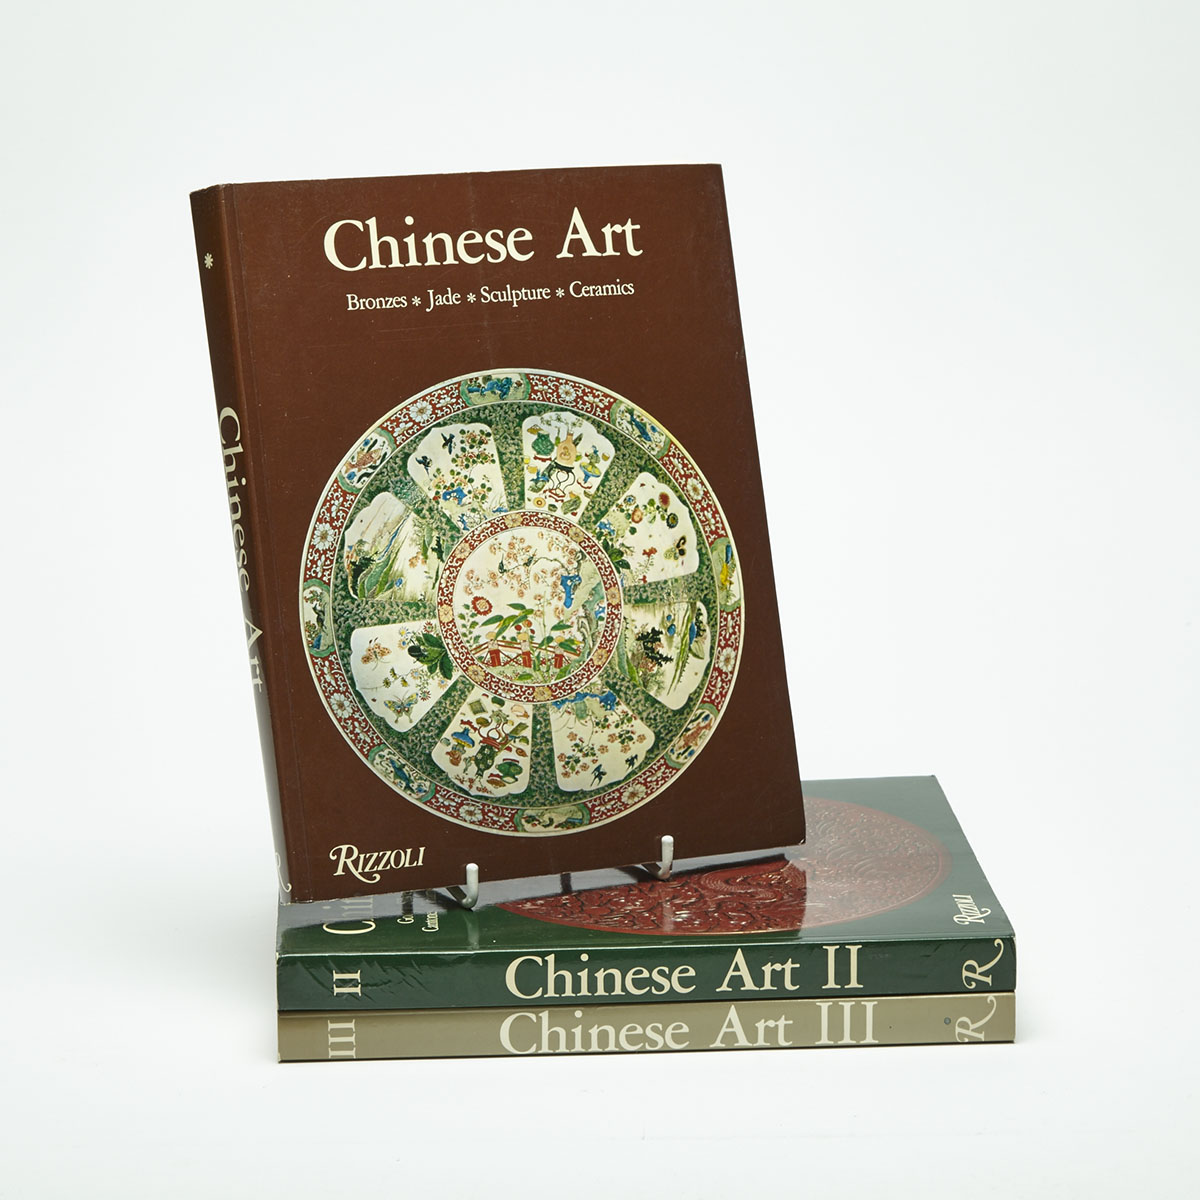 Three Volumes of “Chinese Art” by Rizzoli